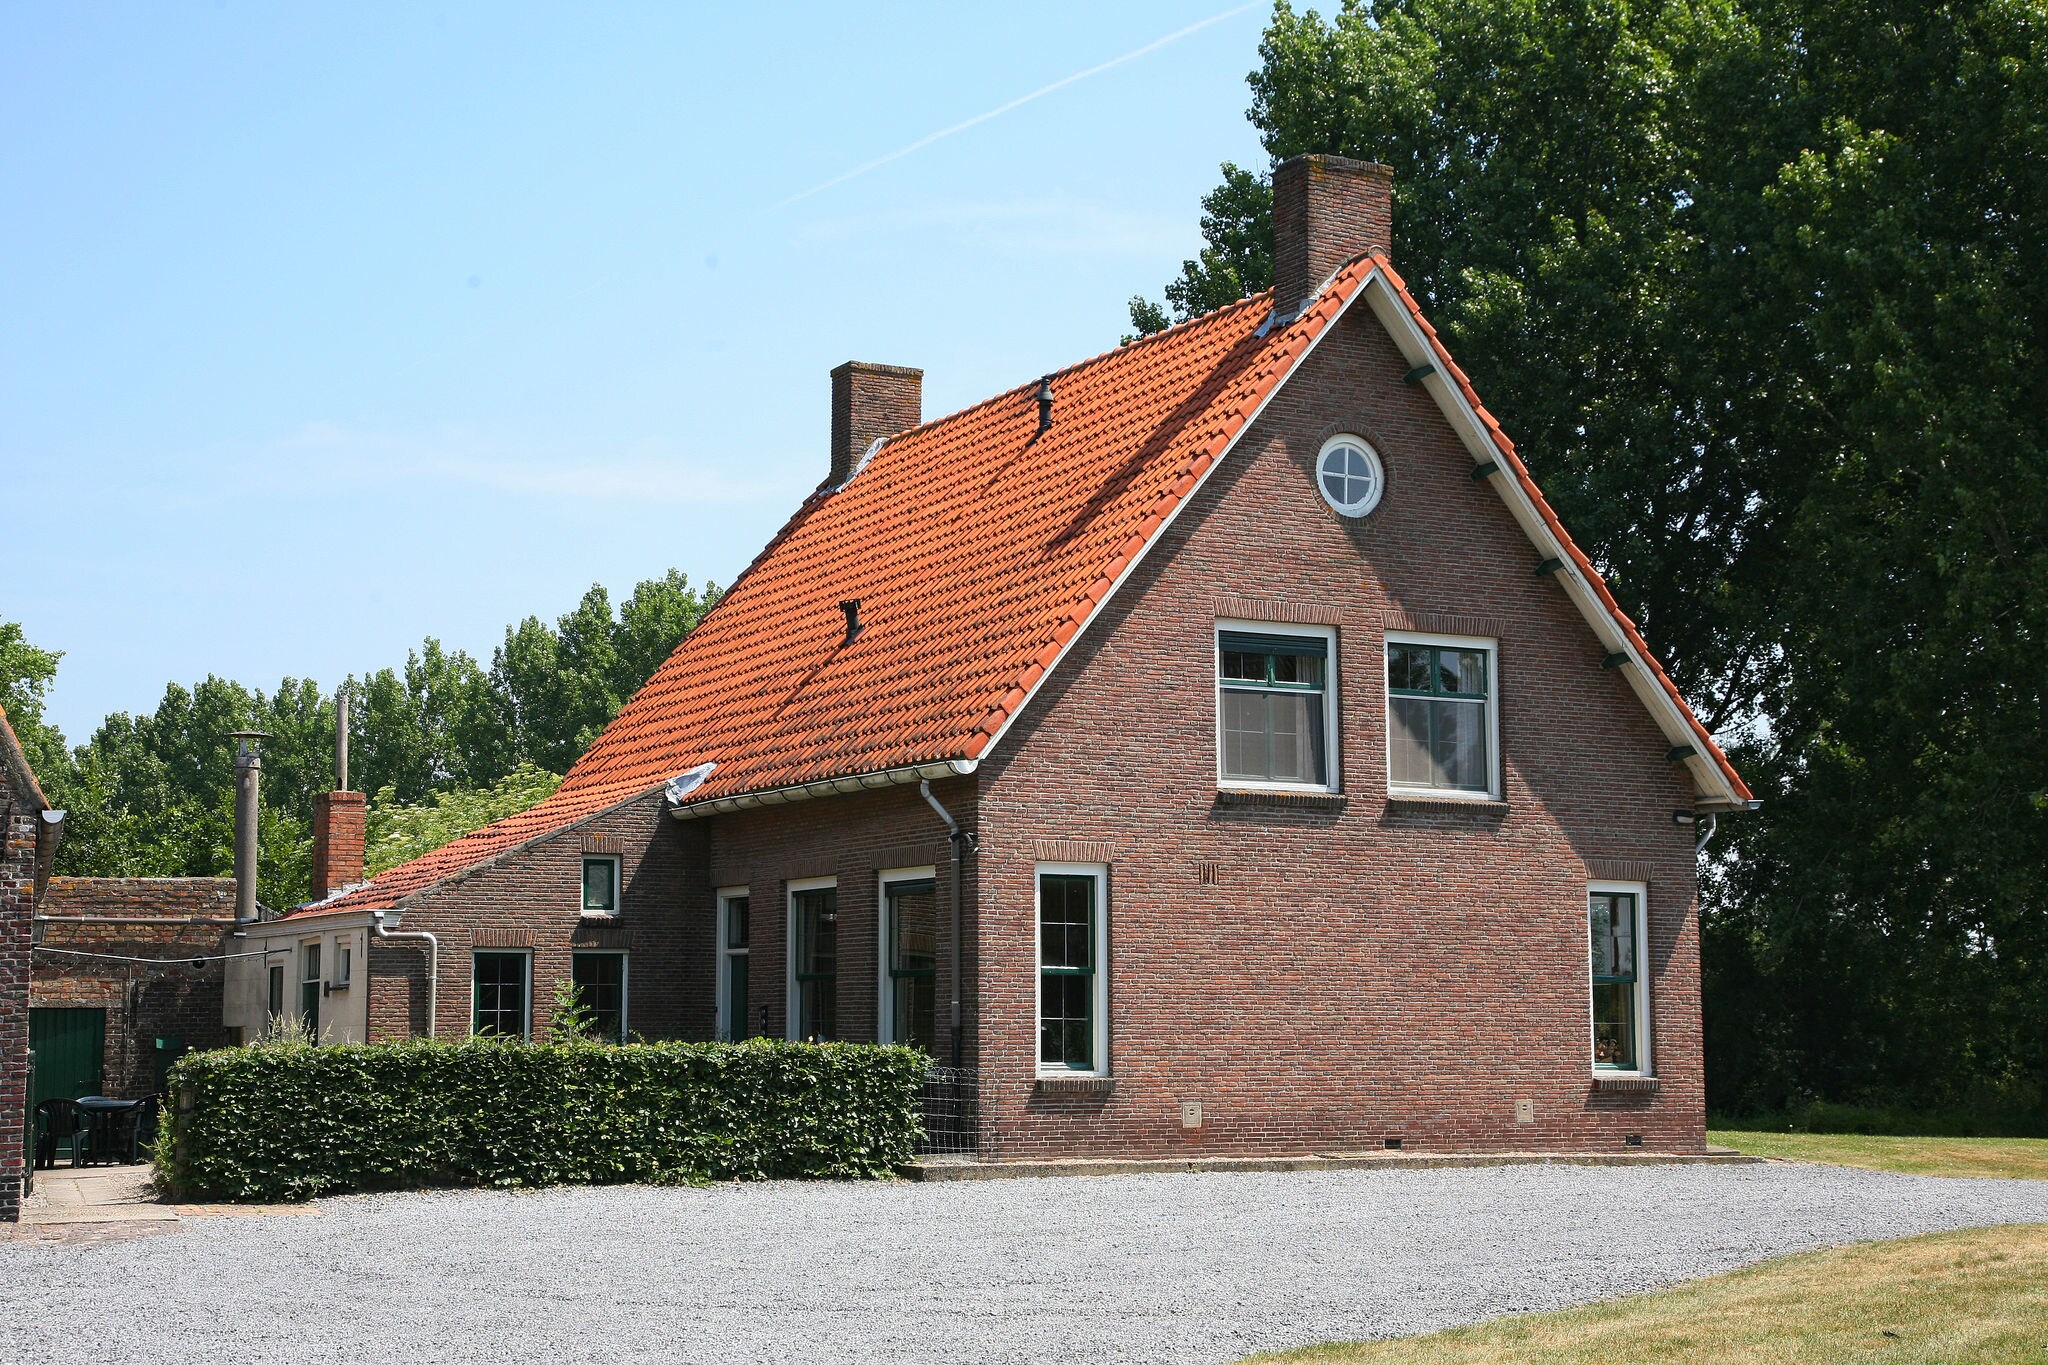 Authentic farmhouse in Zeeland Flanders